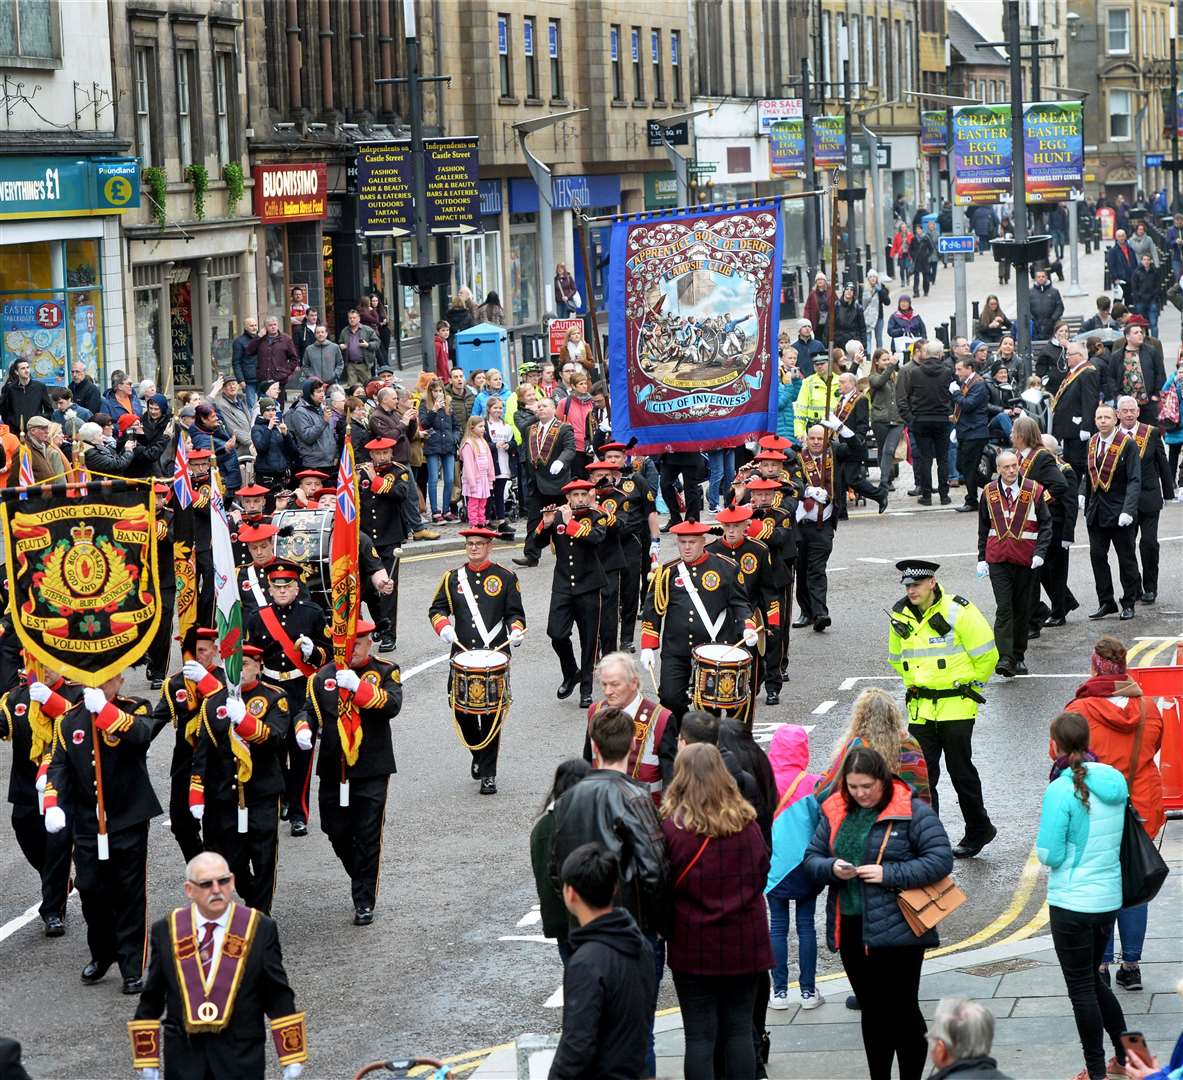 A previous Apprentice Boys of Derry march through Inverness city centre.